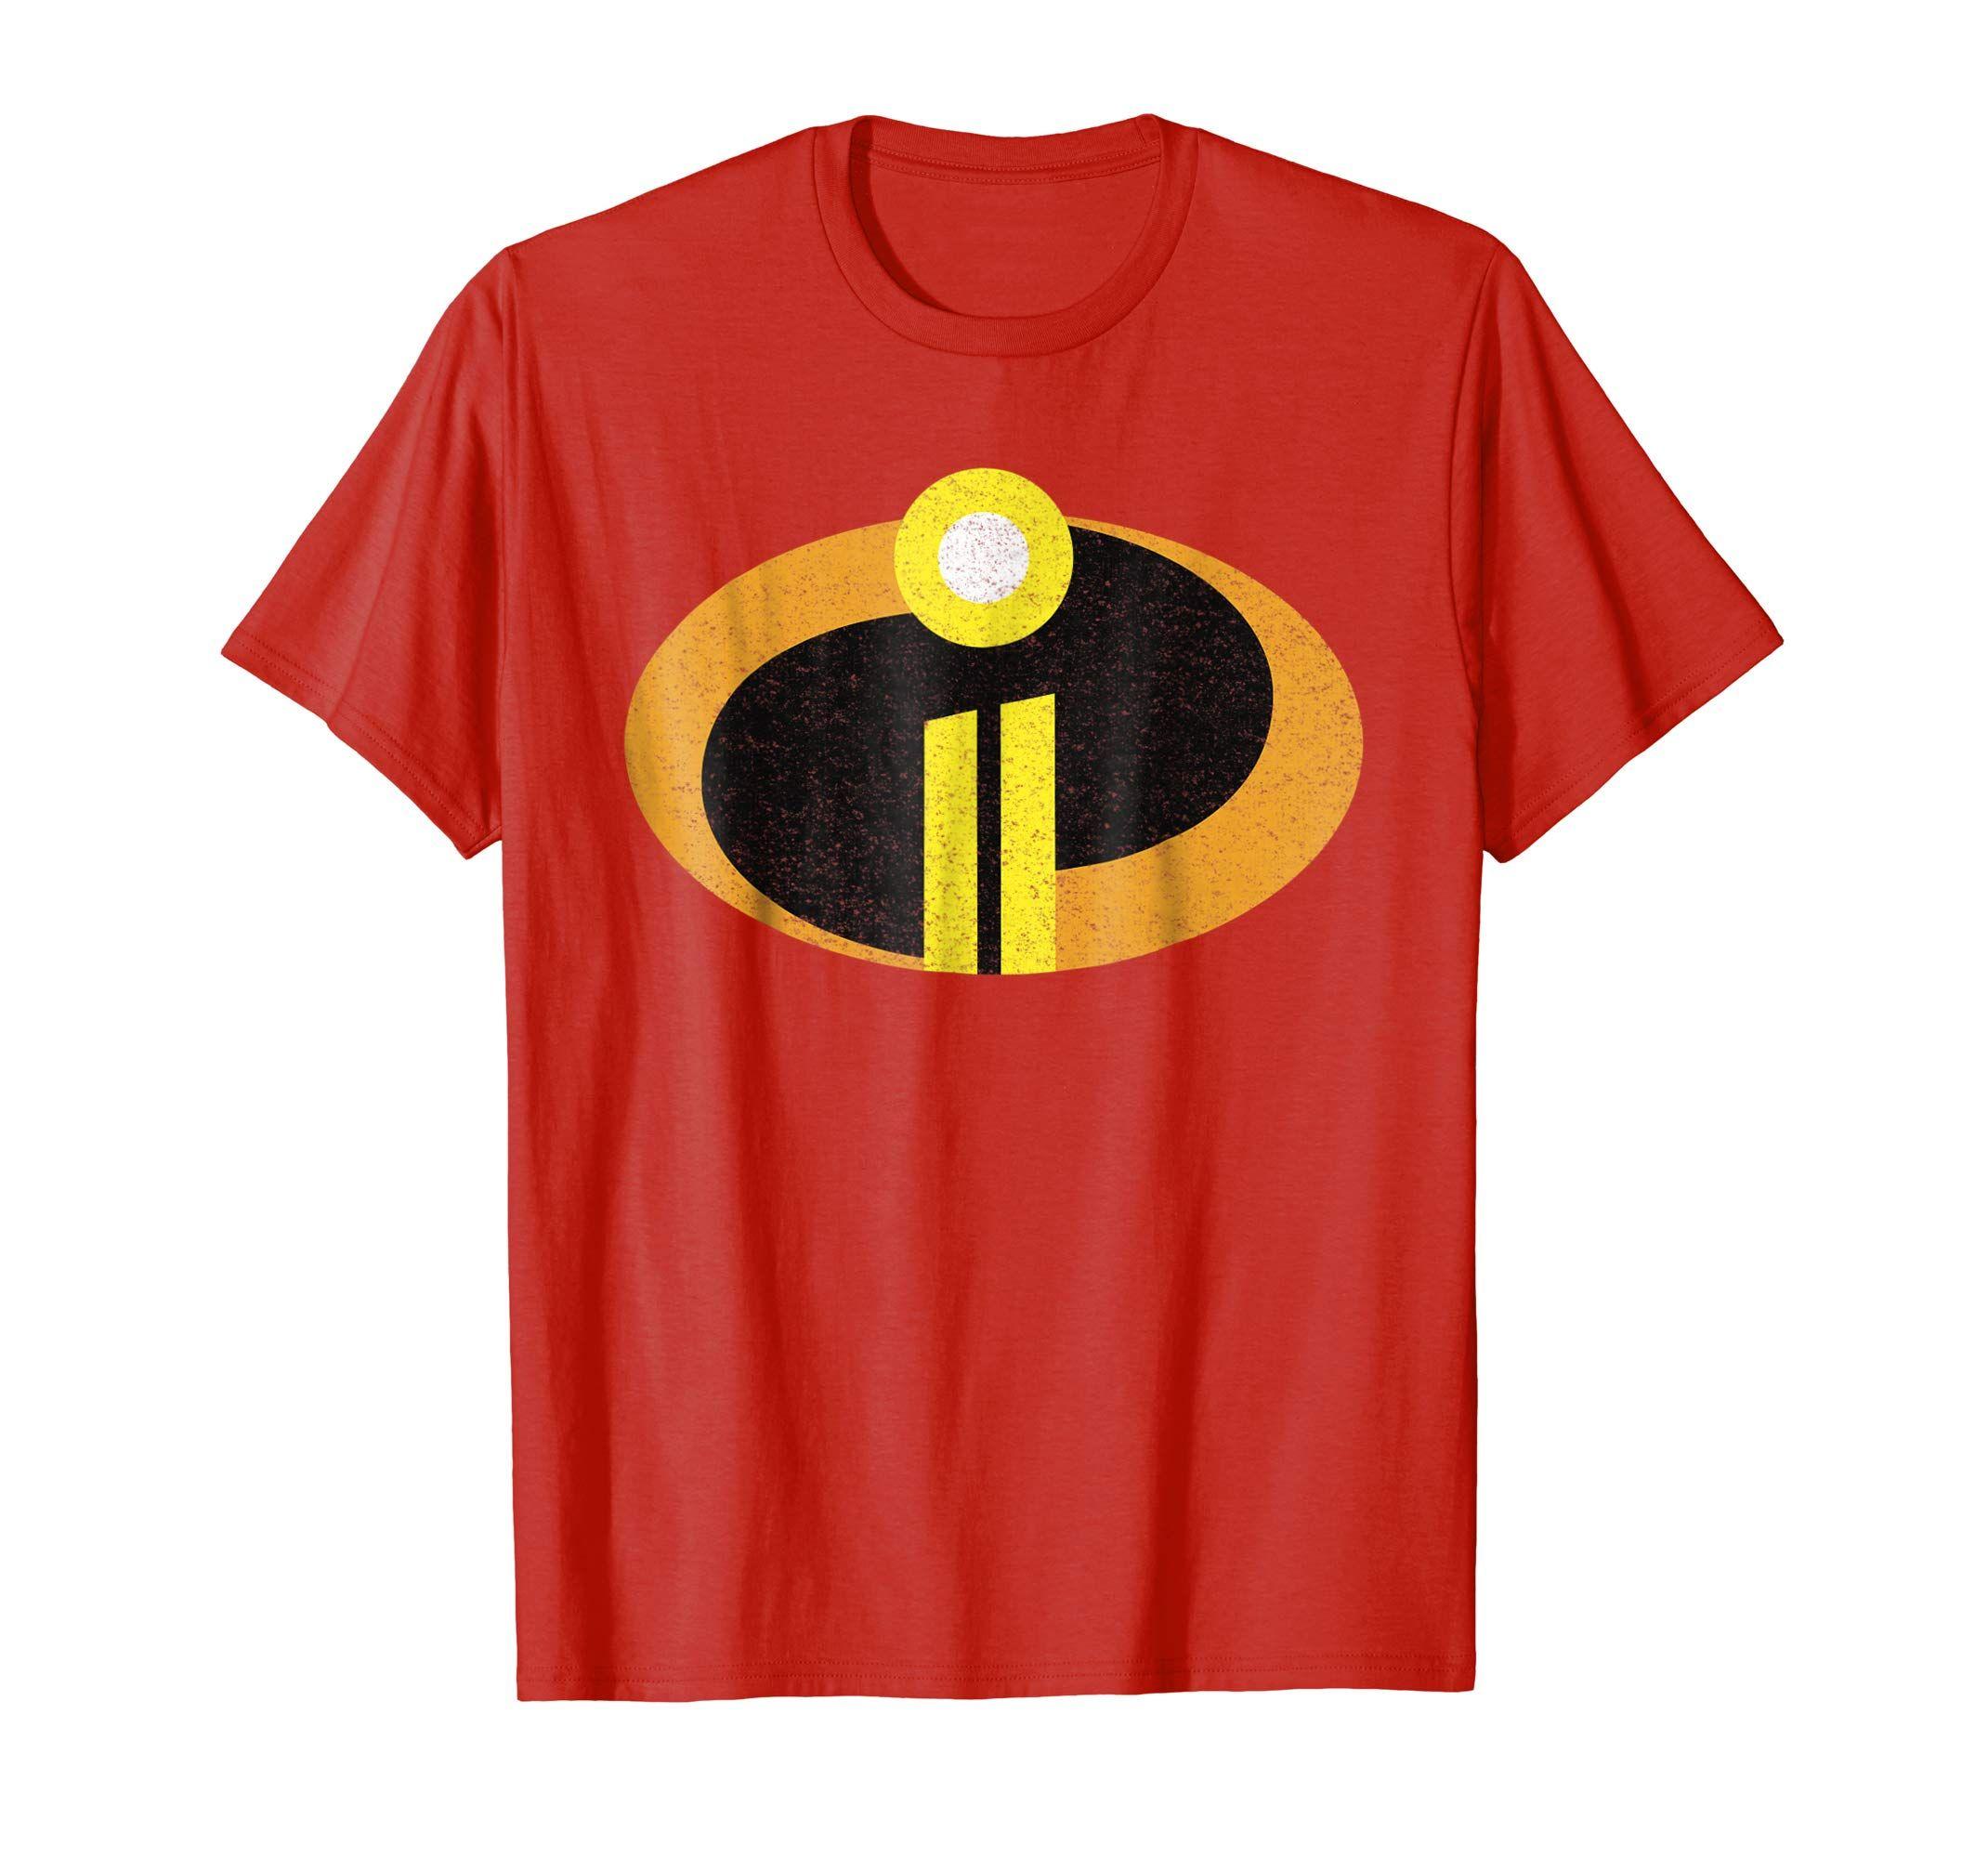 Disney Pixar The Incredibles Logo - Amazon.com: Disney Pixar Incredibles 2 Logo Graphic T-Shirt: Clothing